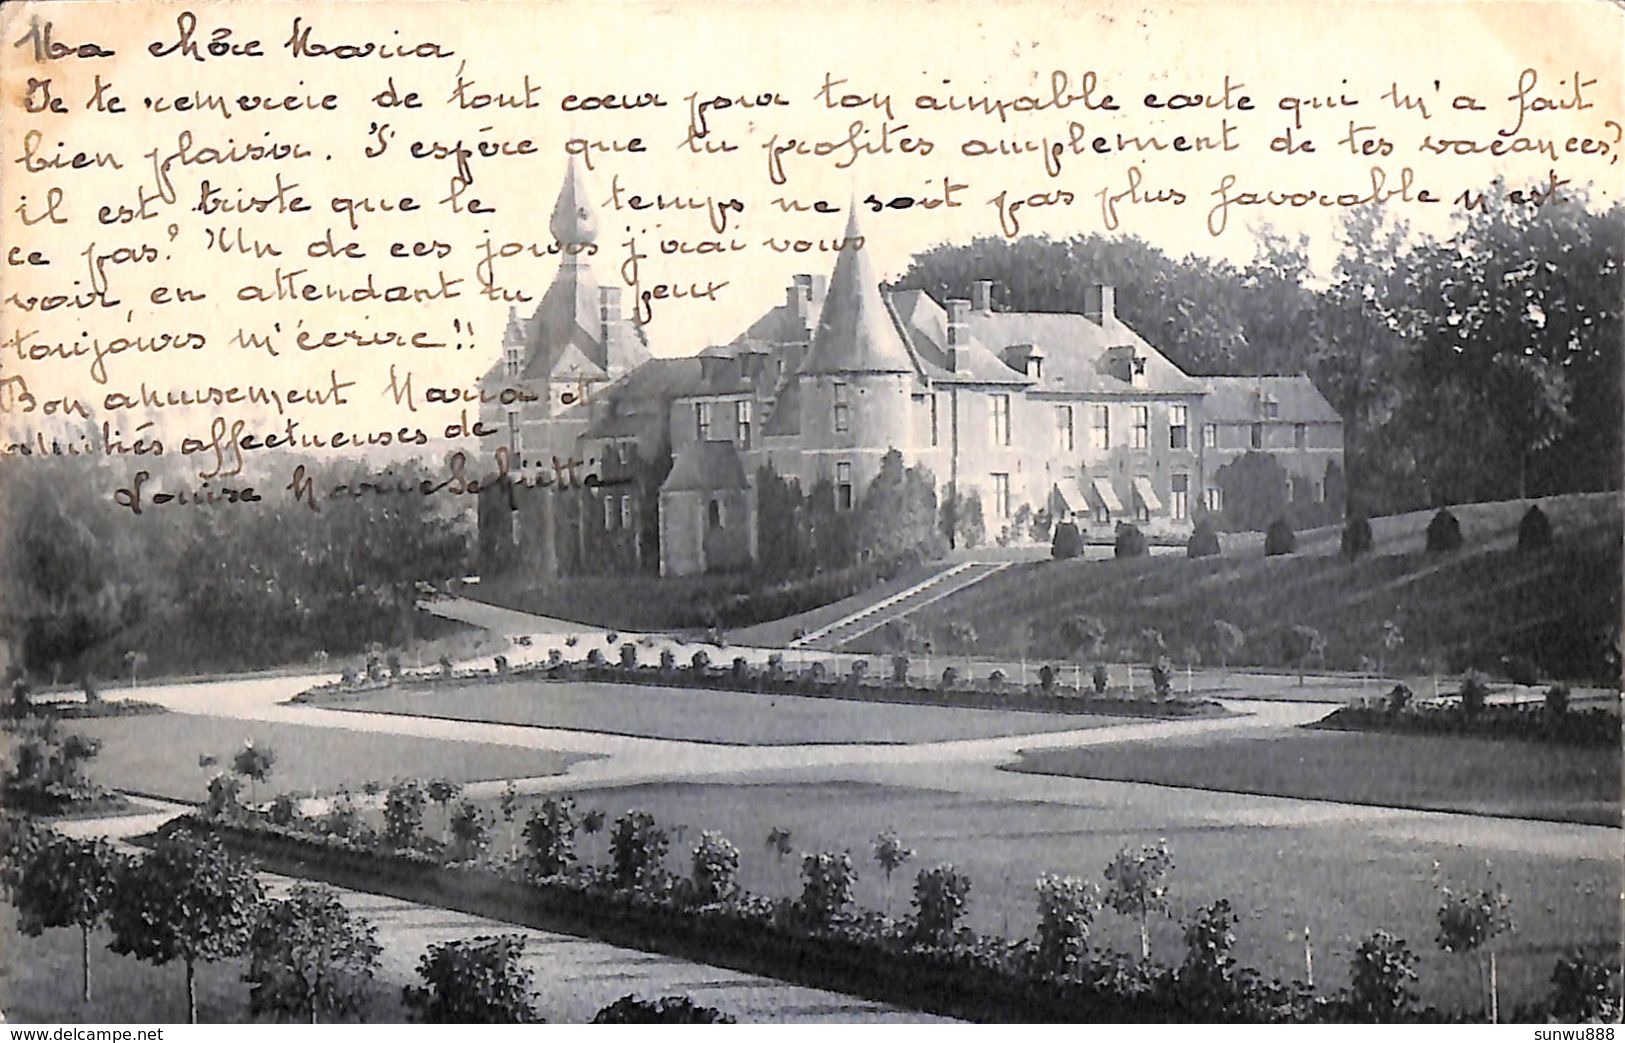 Lefdael (sic) Leefdael Leefdaal Château Kasteel (1904) - Bertem